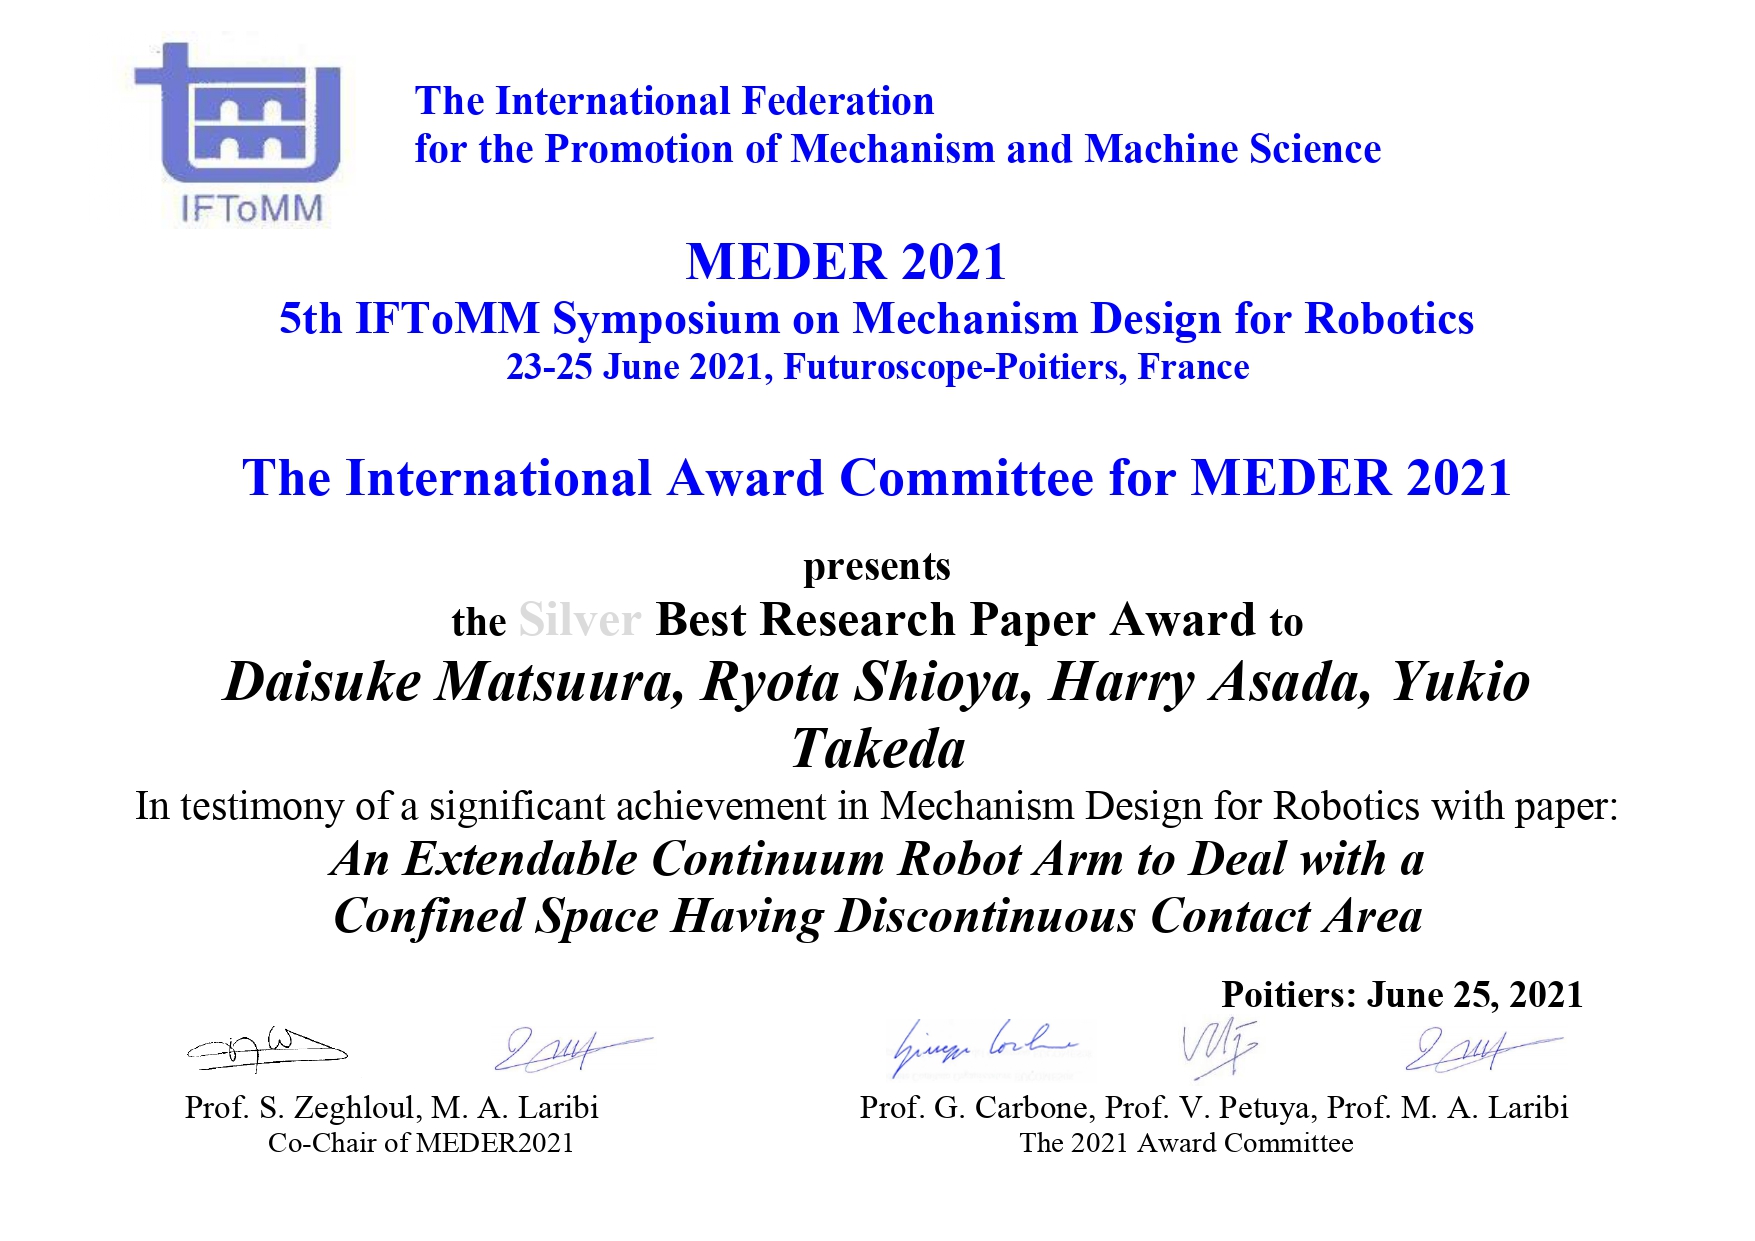 Prof. Daisuke Matsuura won the Silver Best Research Paper Award at MEDER2021